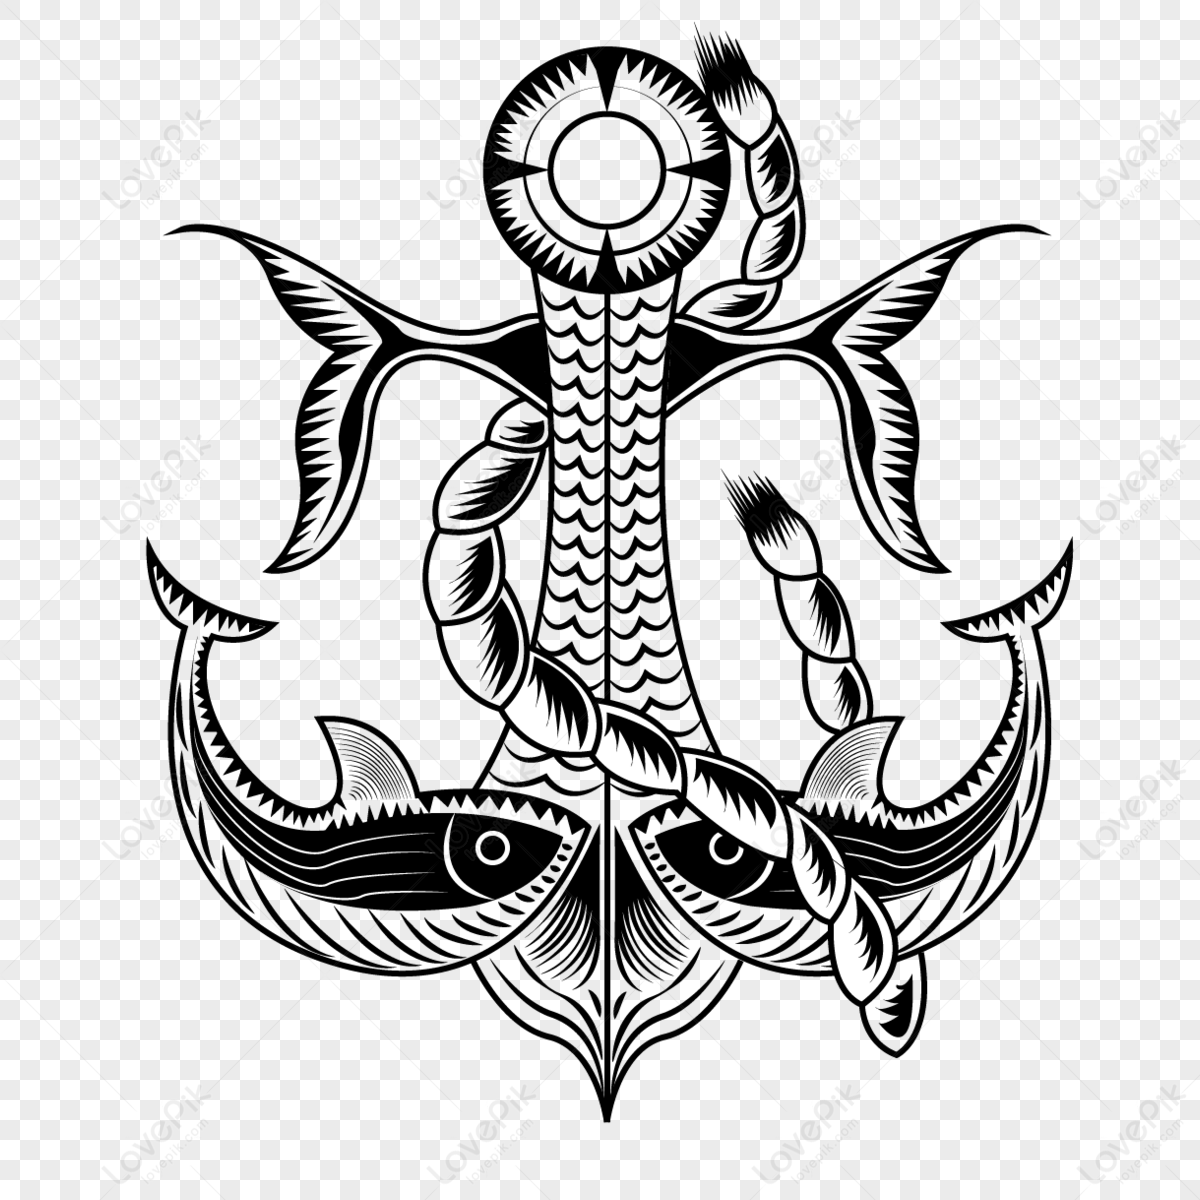 Ship Anchor. Tattoo. Vector Illustration. Steel Marine Emblem. Royalty Free  SVG, Cliparts, Vectors, and Stock Illustration. Image 59850129.